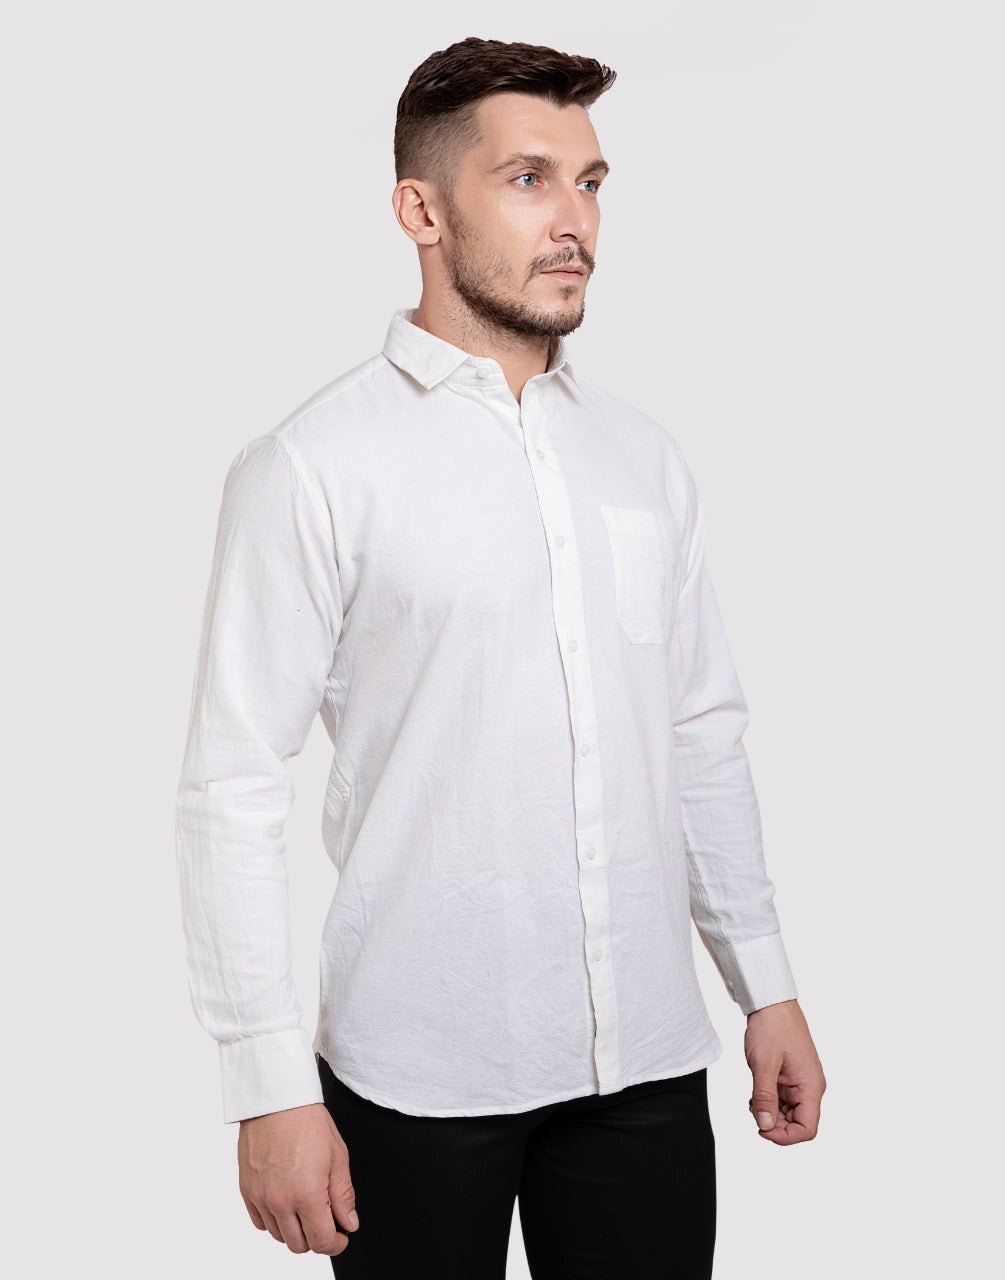 White plain formal wear shirt